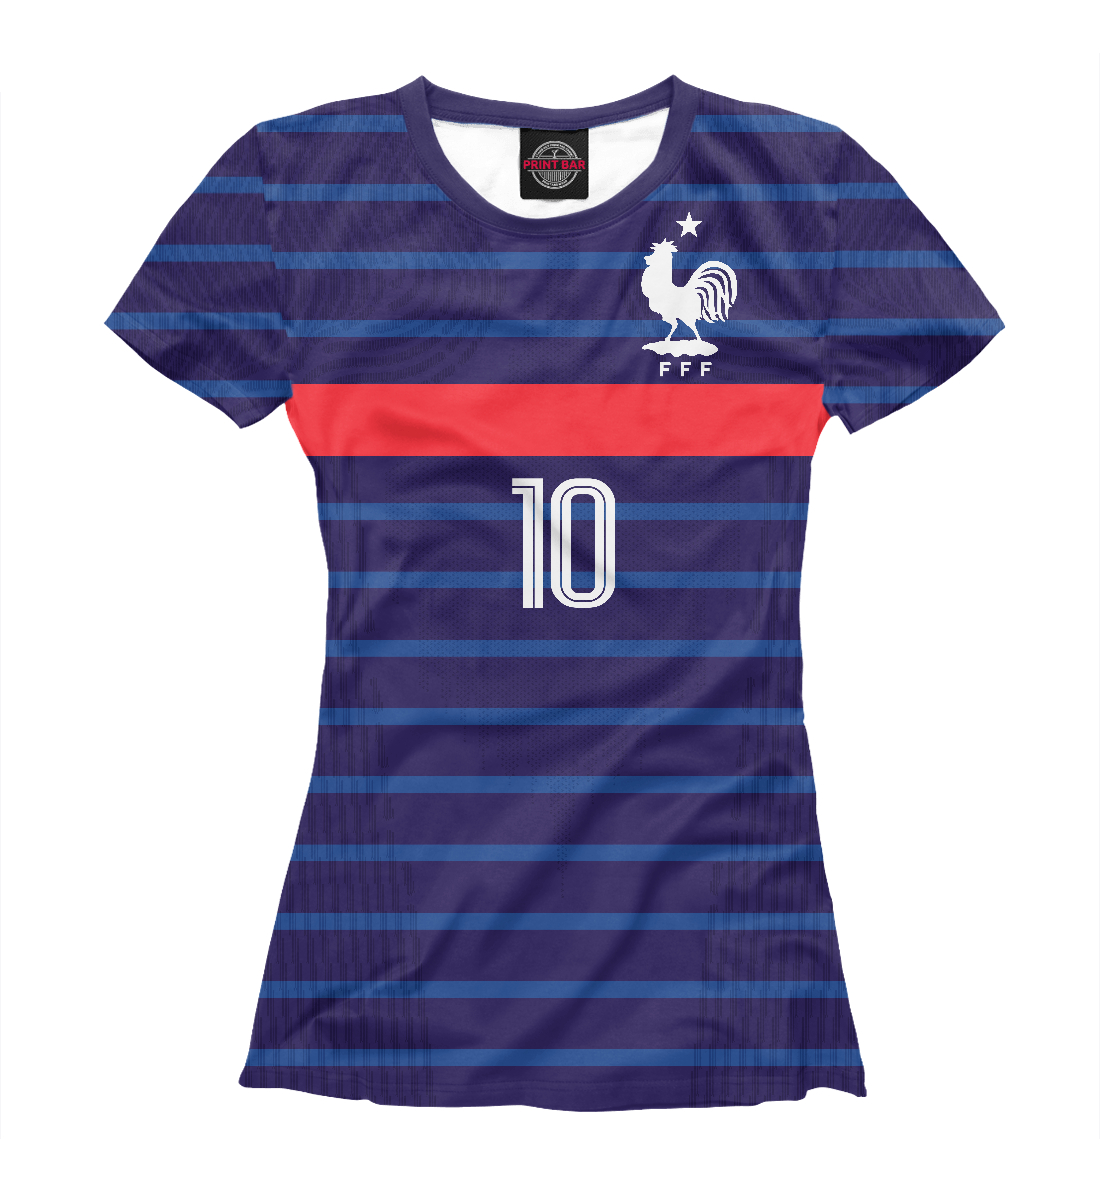 Футболка Сборная Франции Мбаппе для женщин, артикул: SFC-419702-fut-1mp